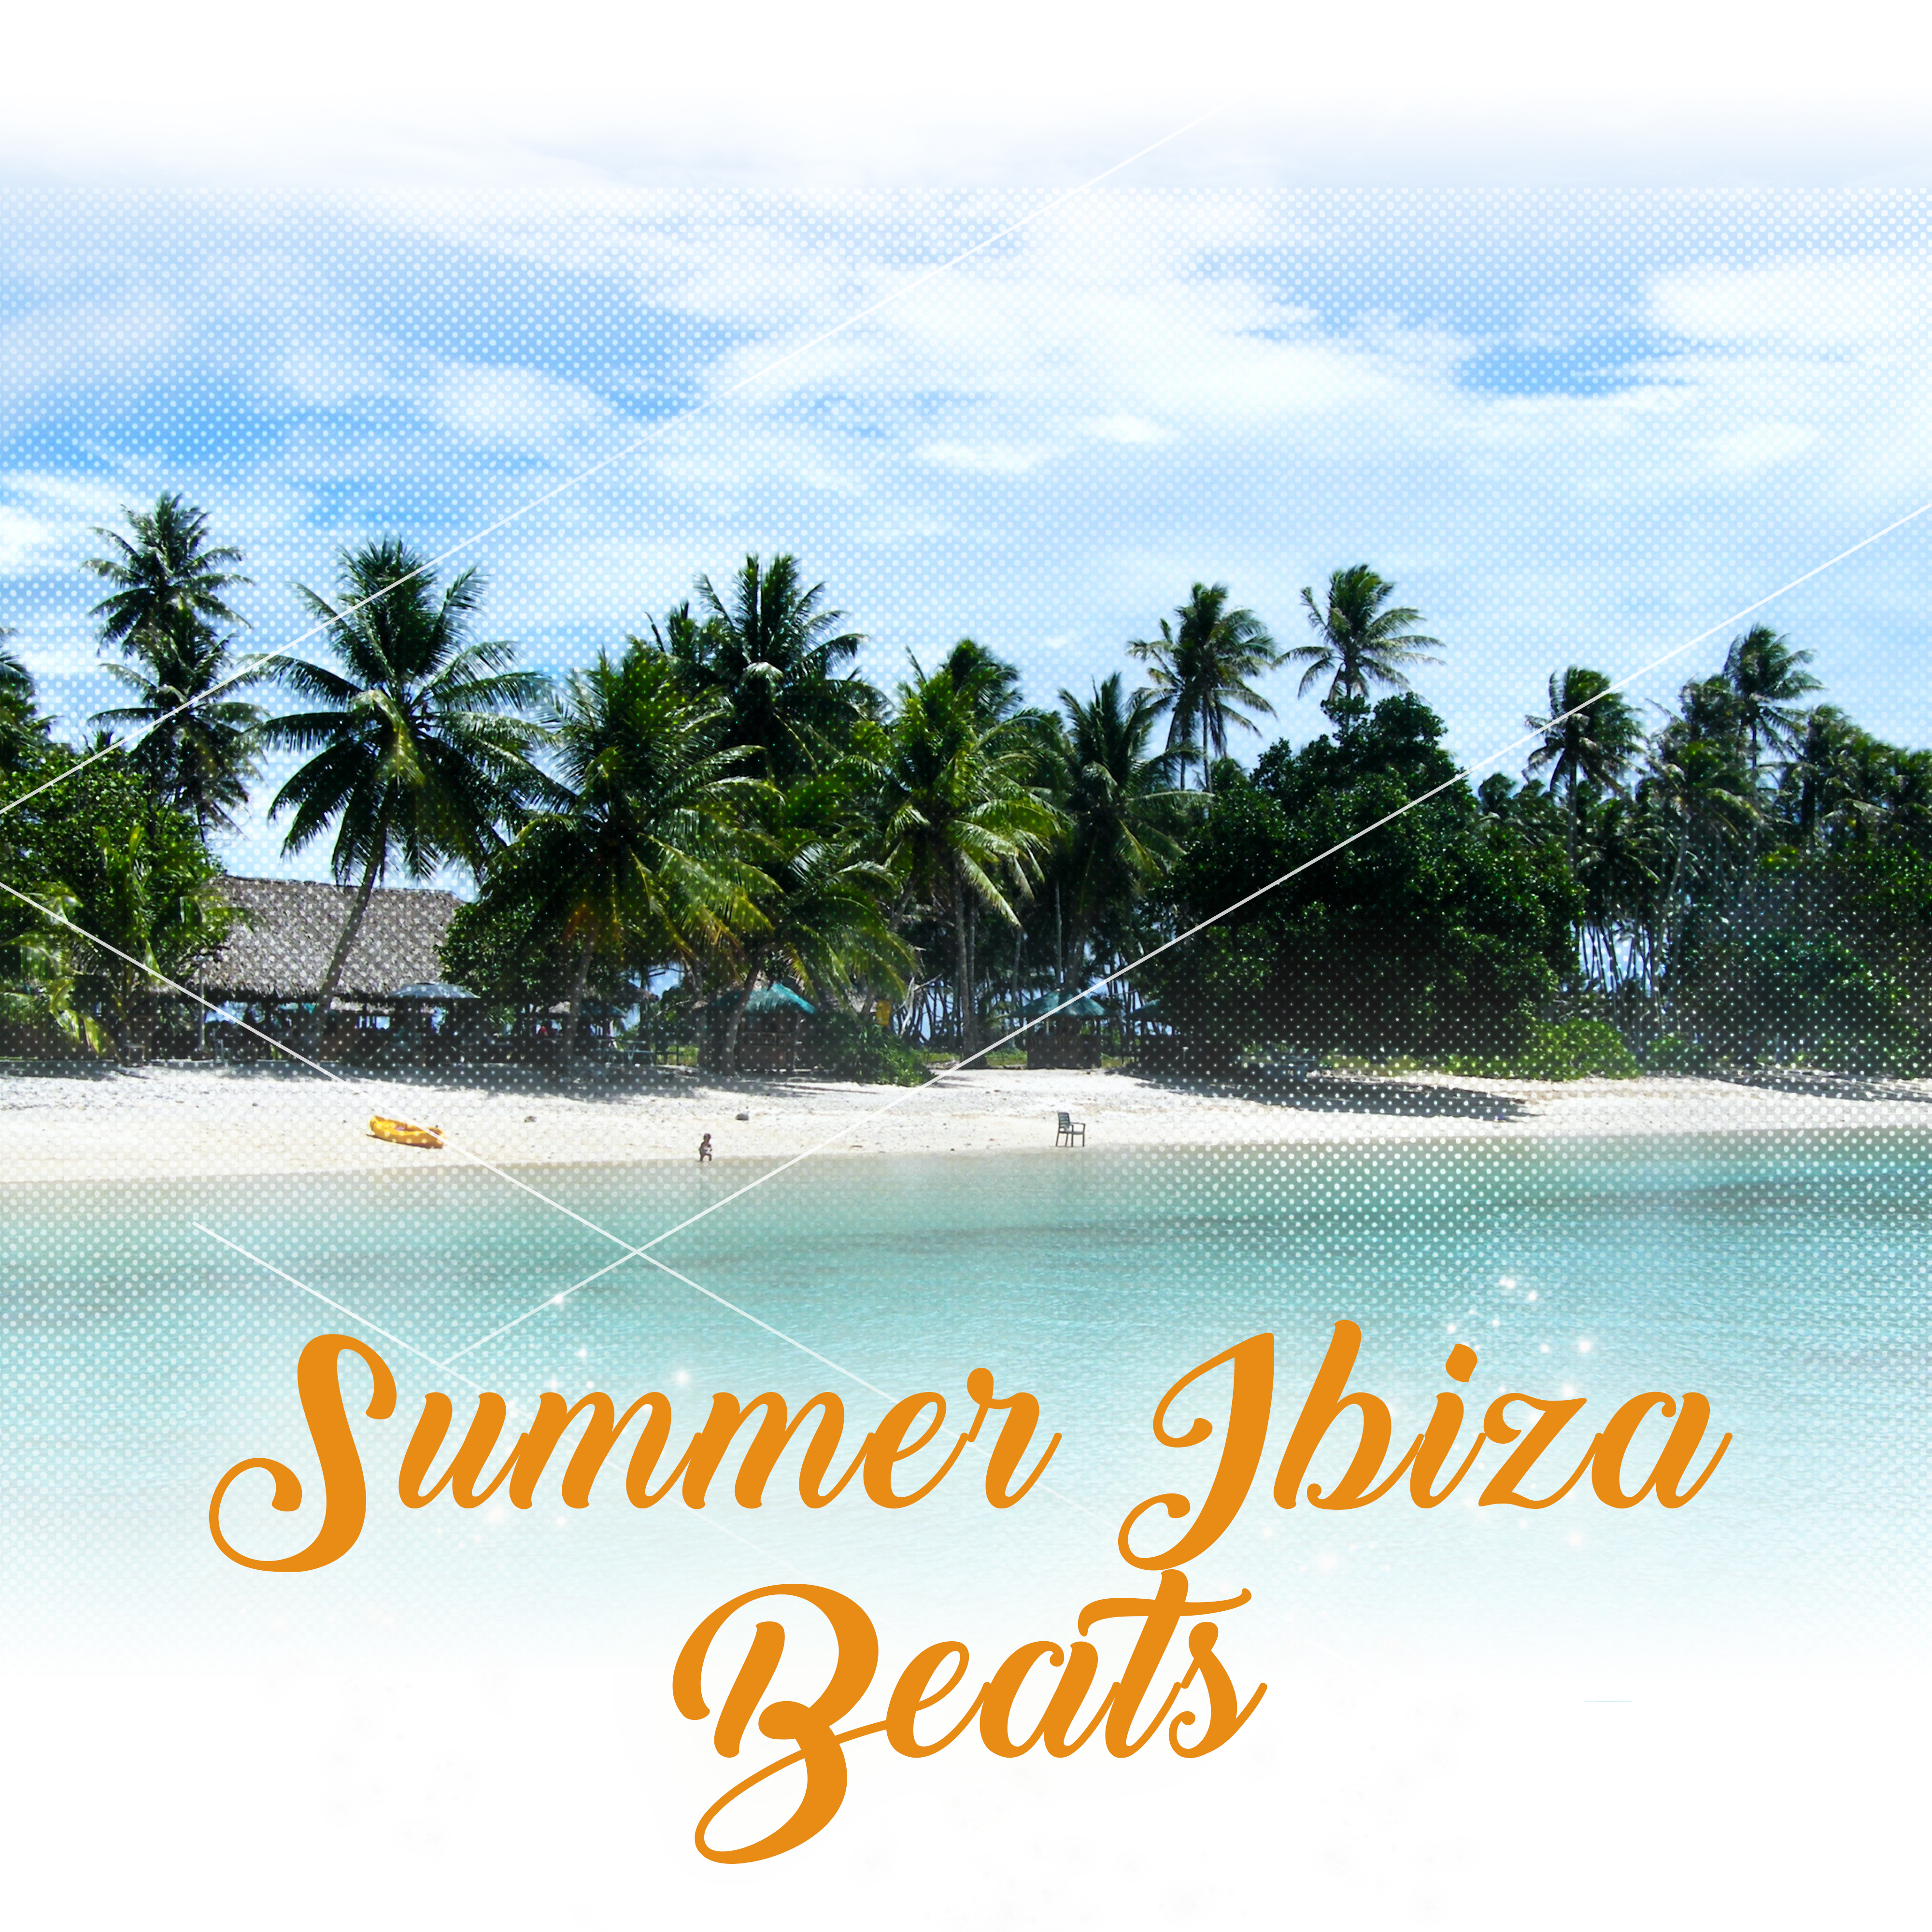 Summer Ibiza Beats